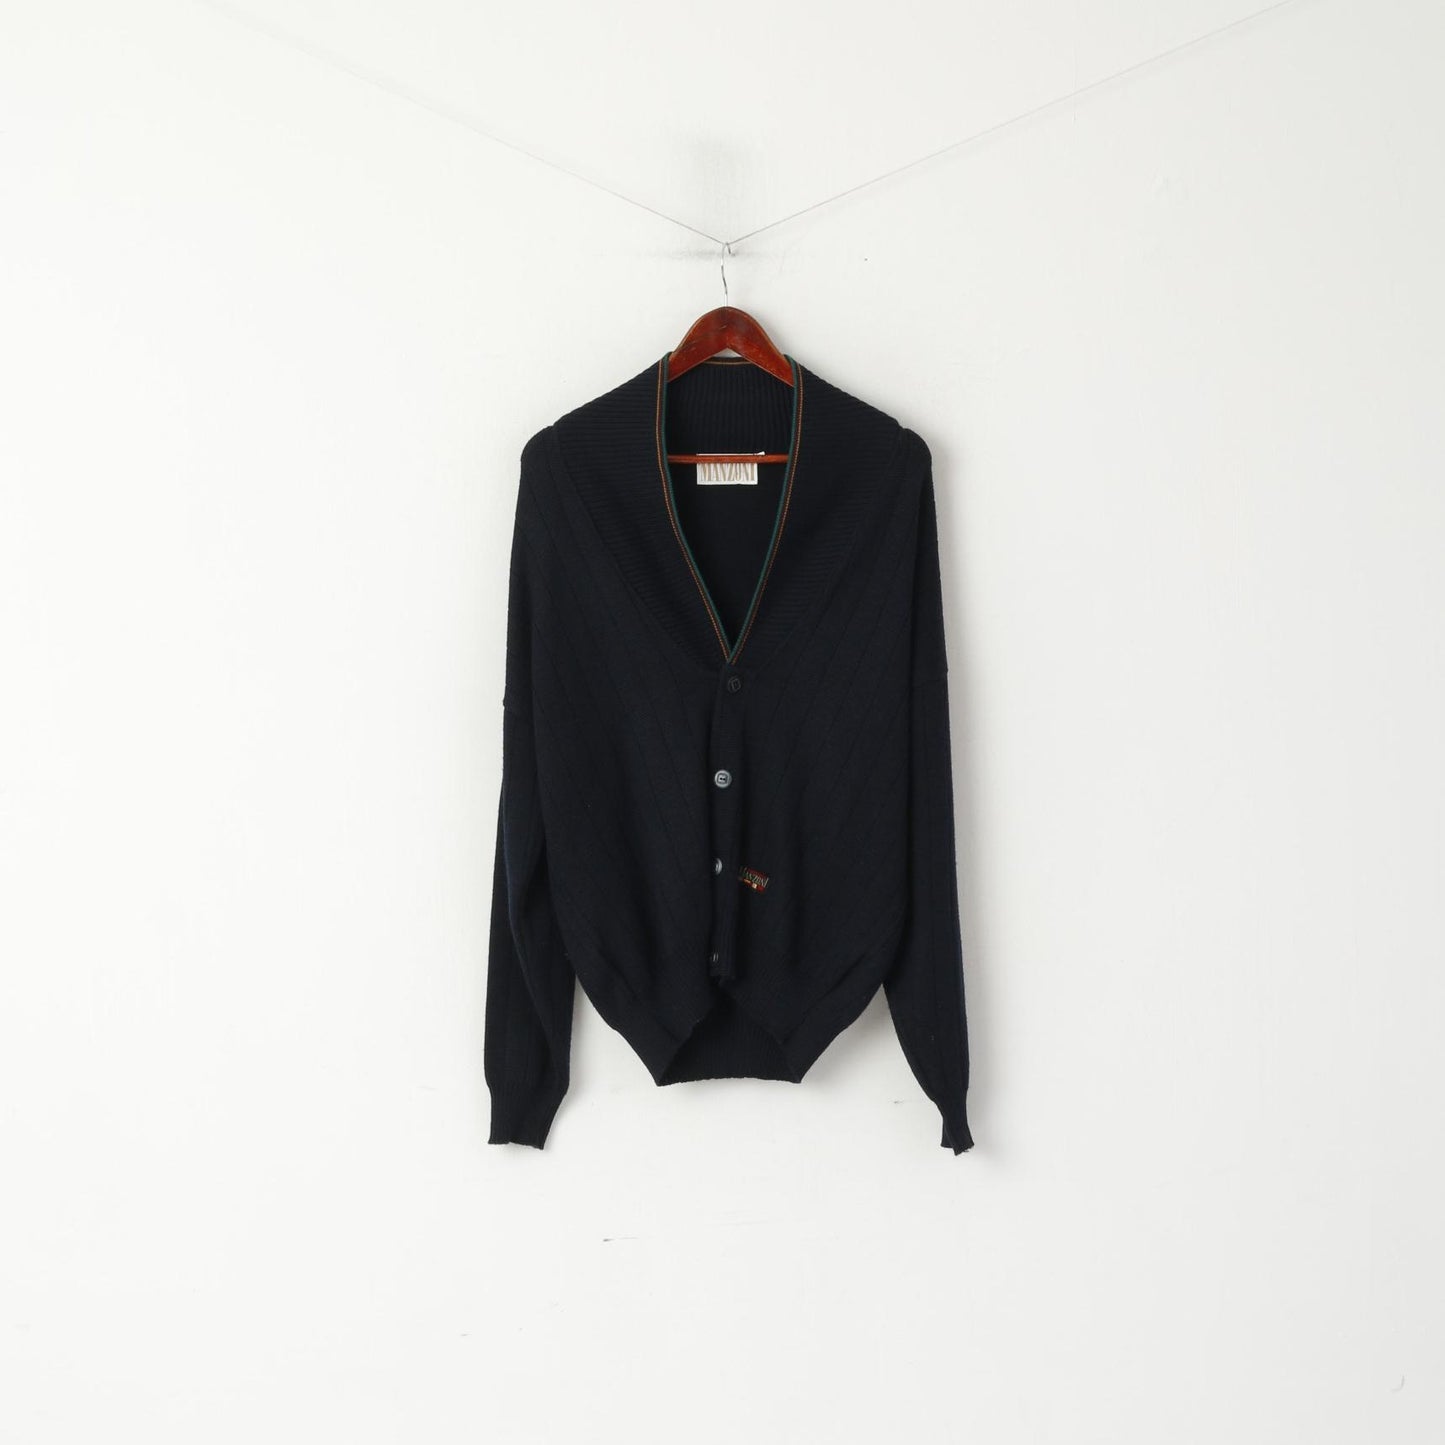 Carlo Manzoni Men M Sweater Navy Wool Button Front Cardigan Shawl Collar Top